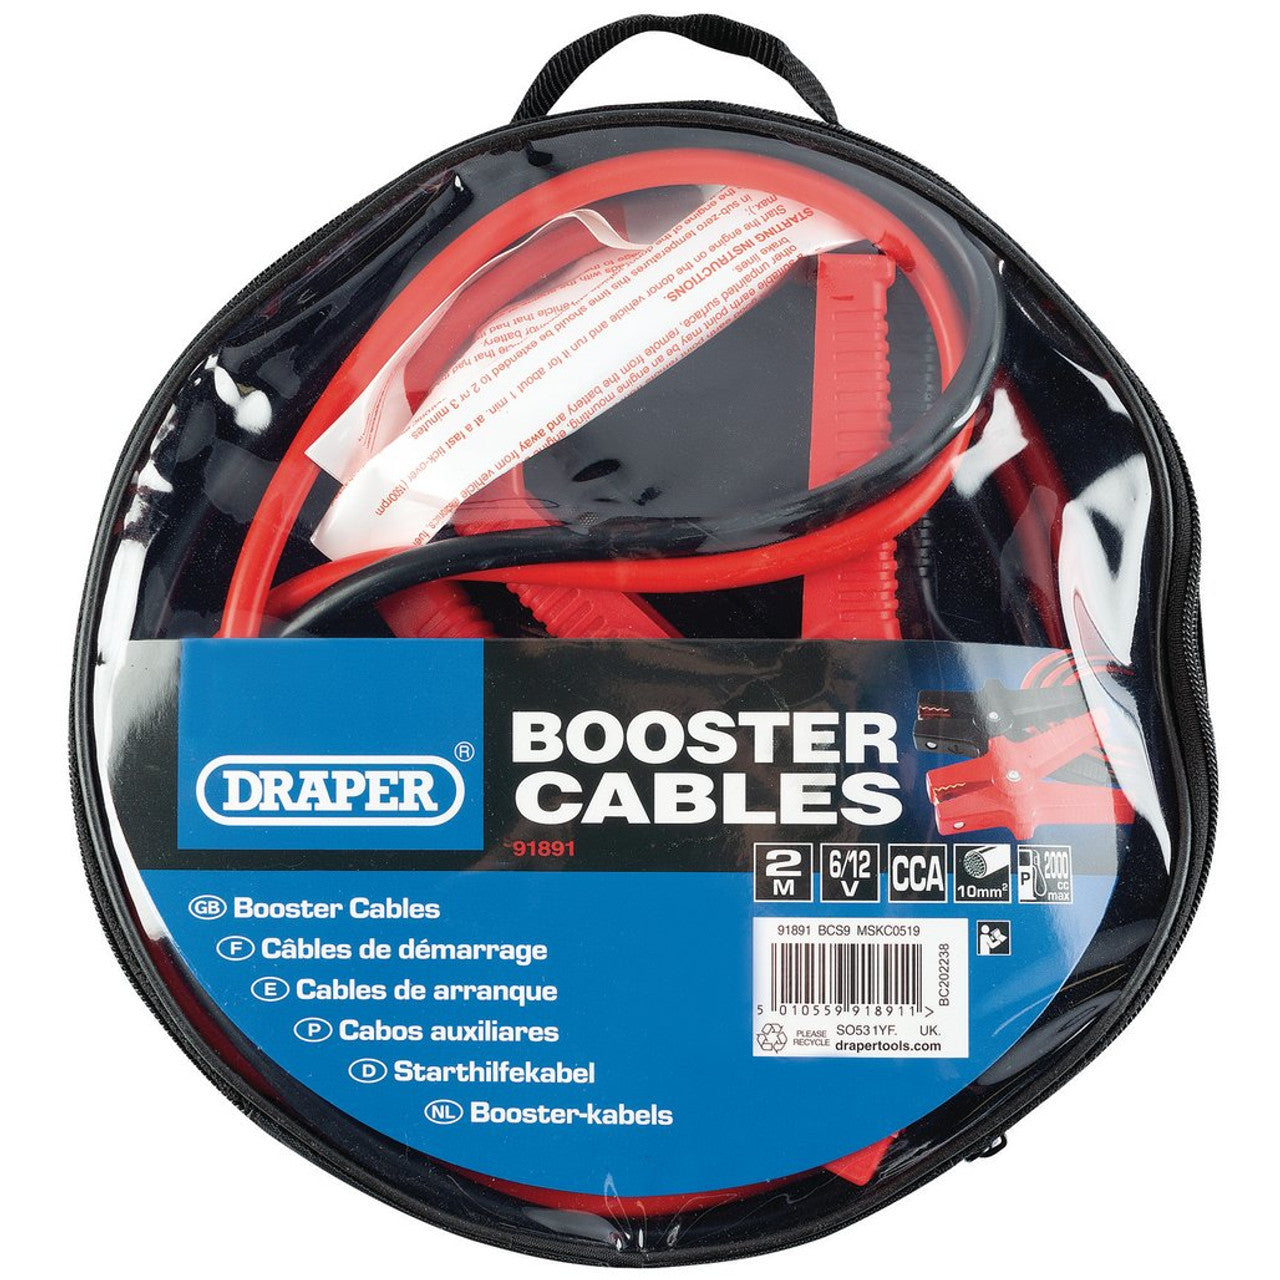 Draper 91891 Booster Cables (10mm x 2M)